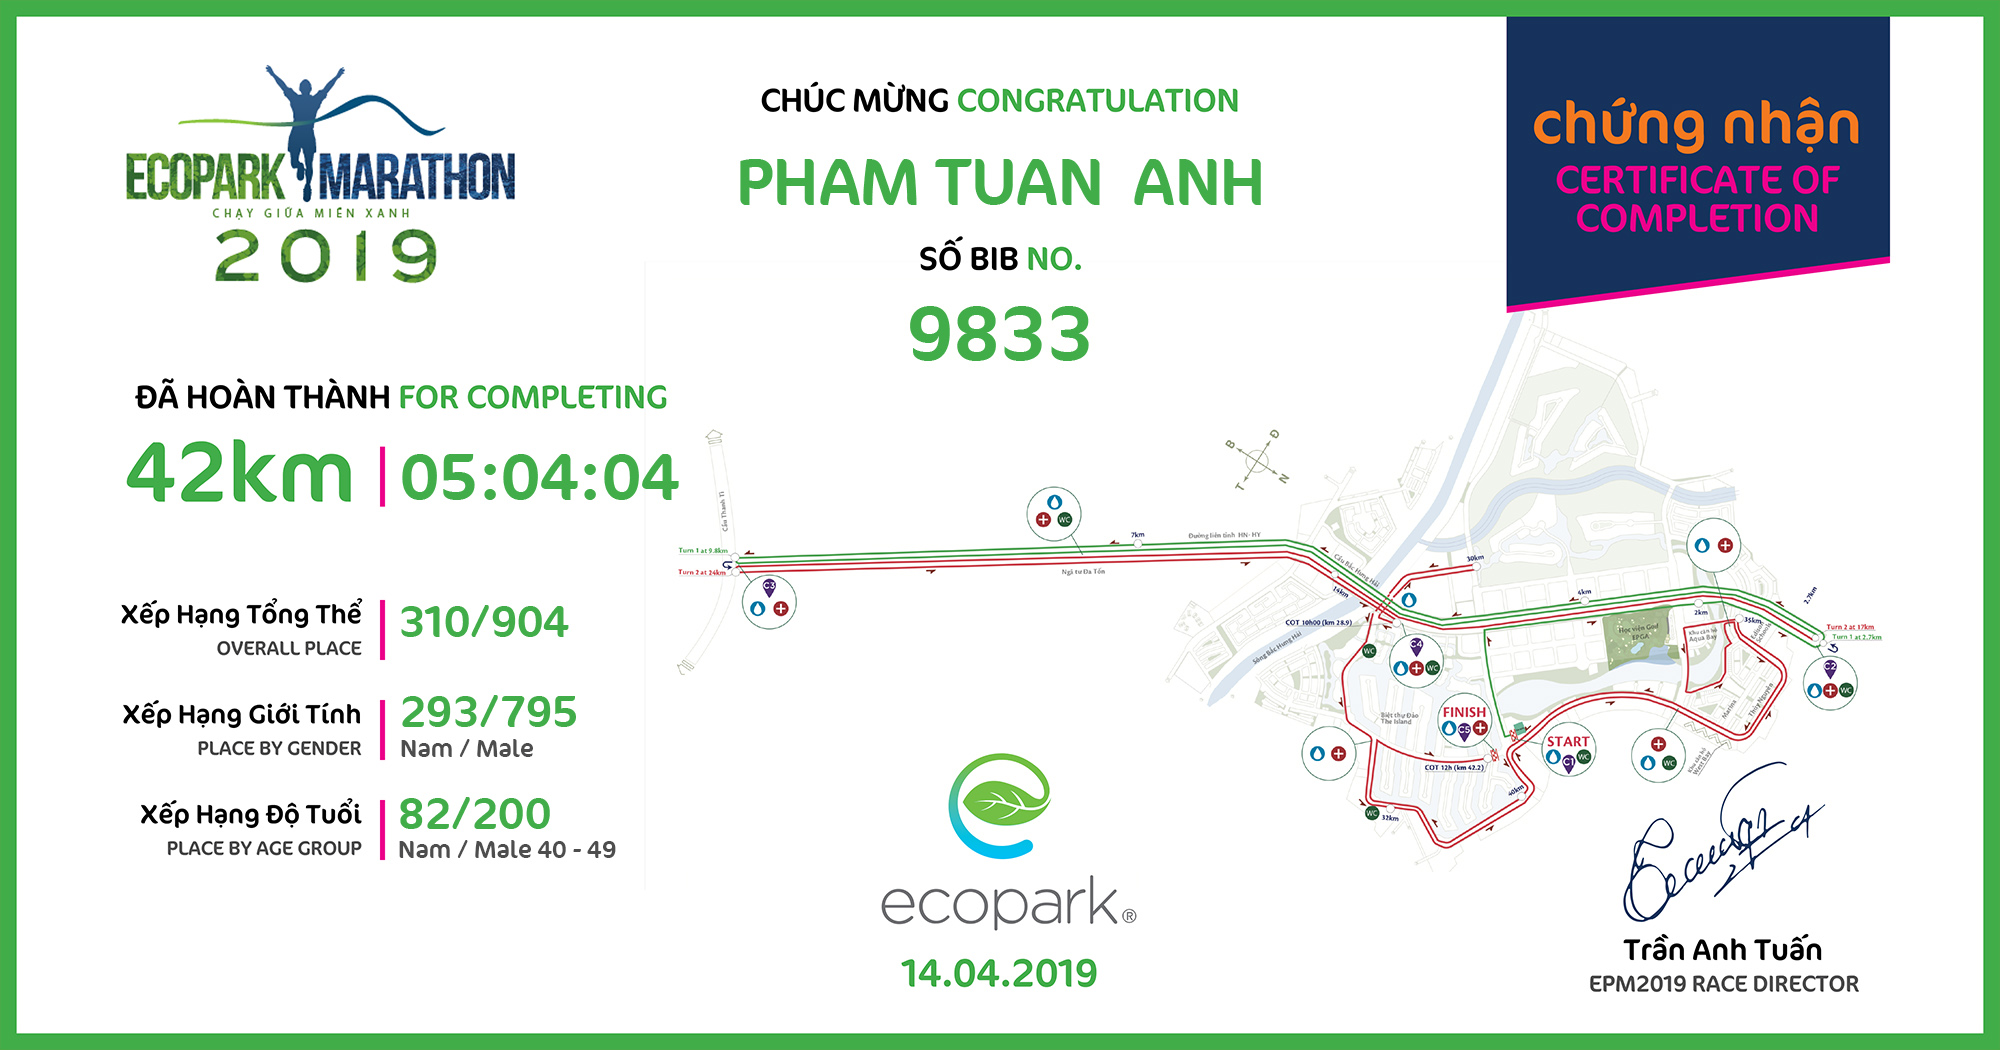 9833 - Pham tuan  Anh